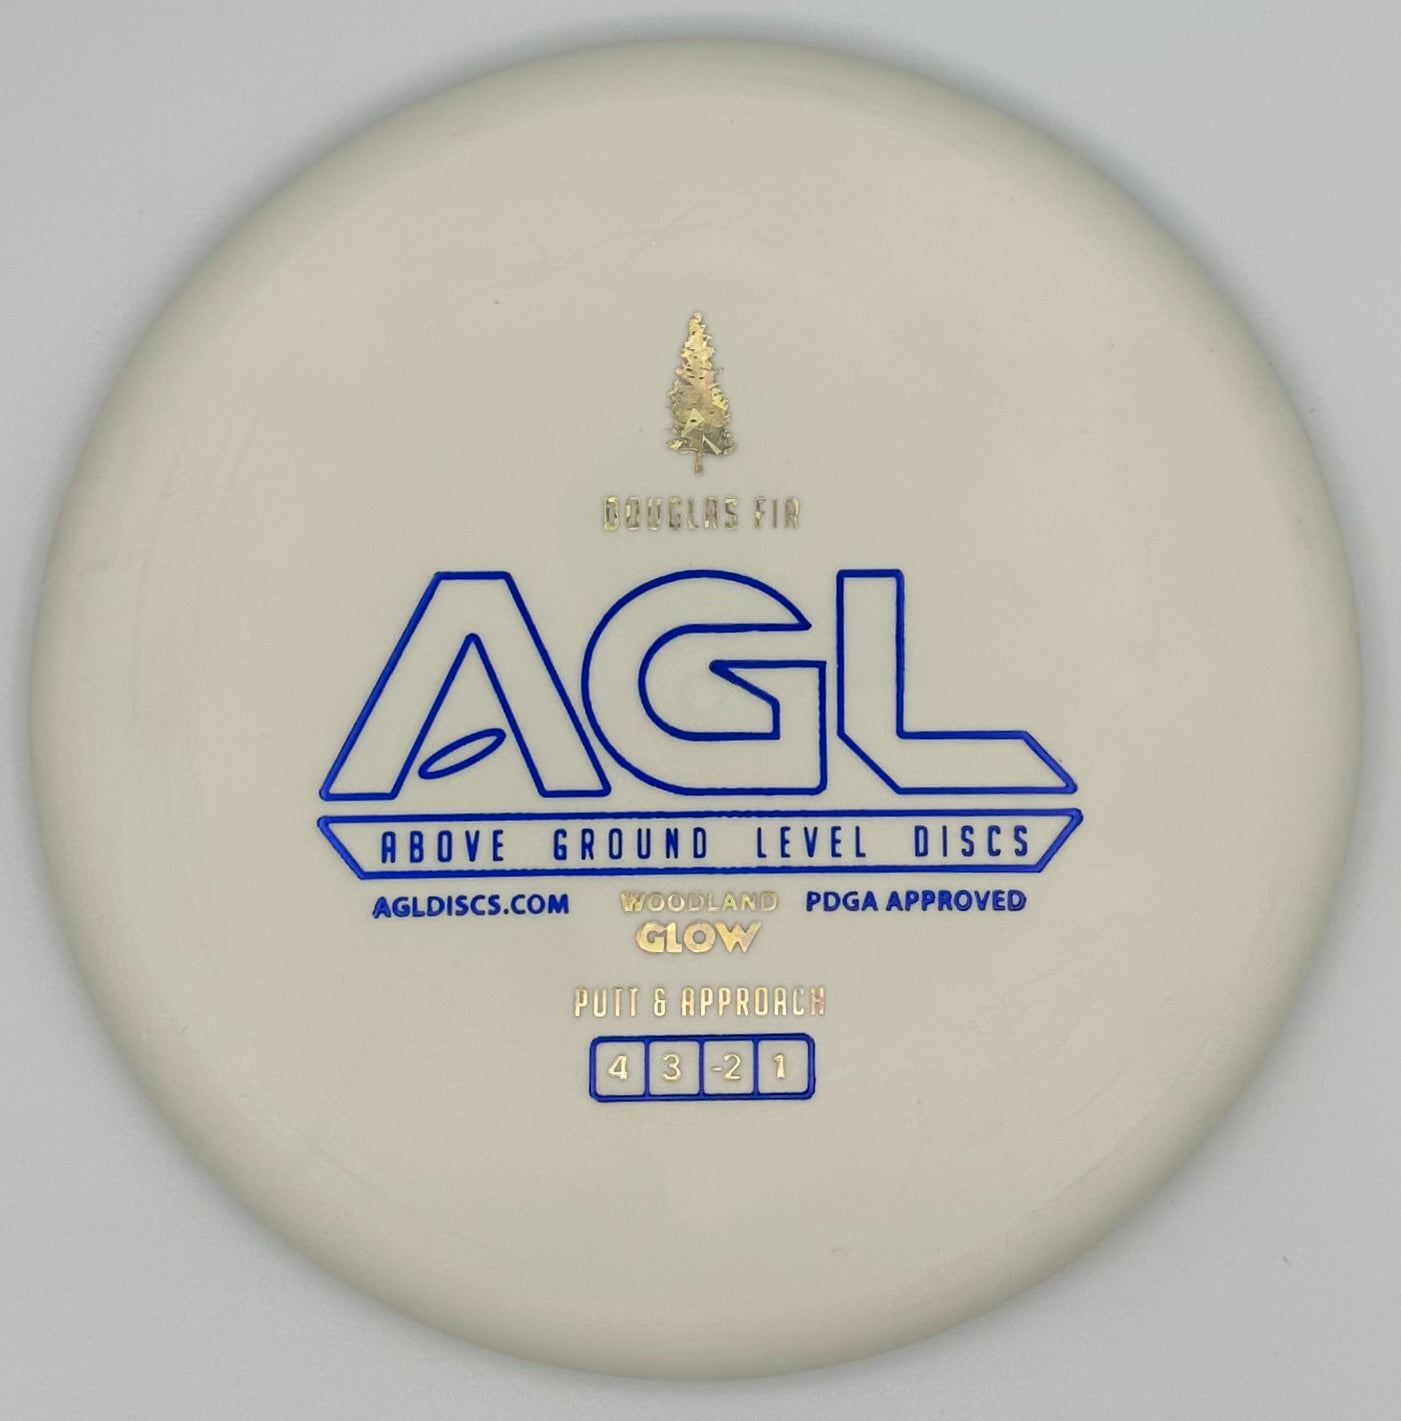 AGL Discs - White Woodland GLOW Douglas Fir (AGL Bar Stamp)